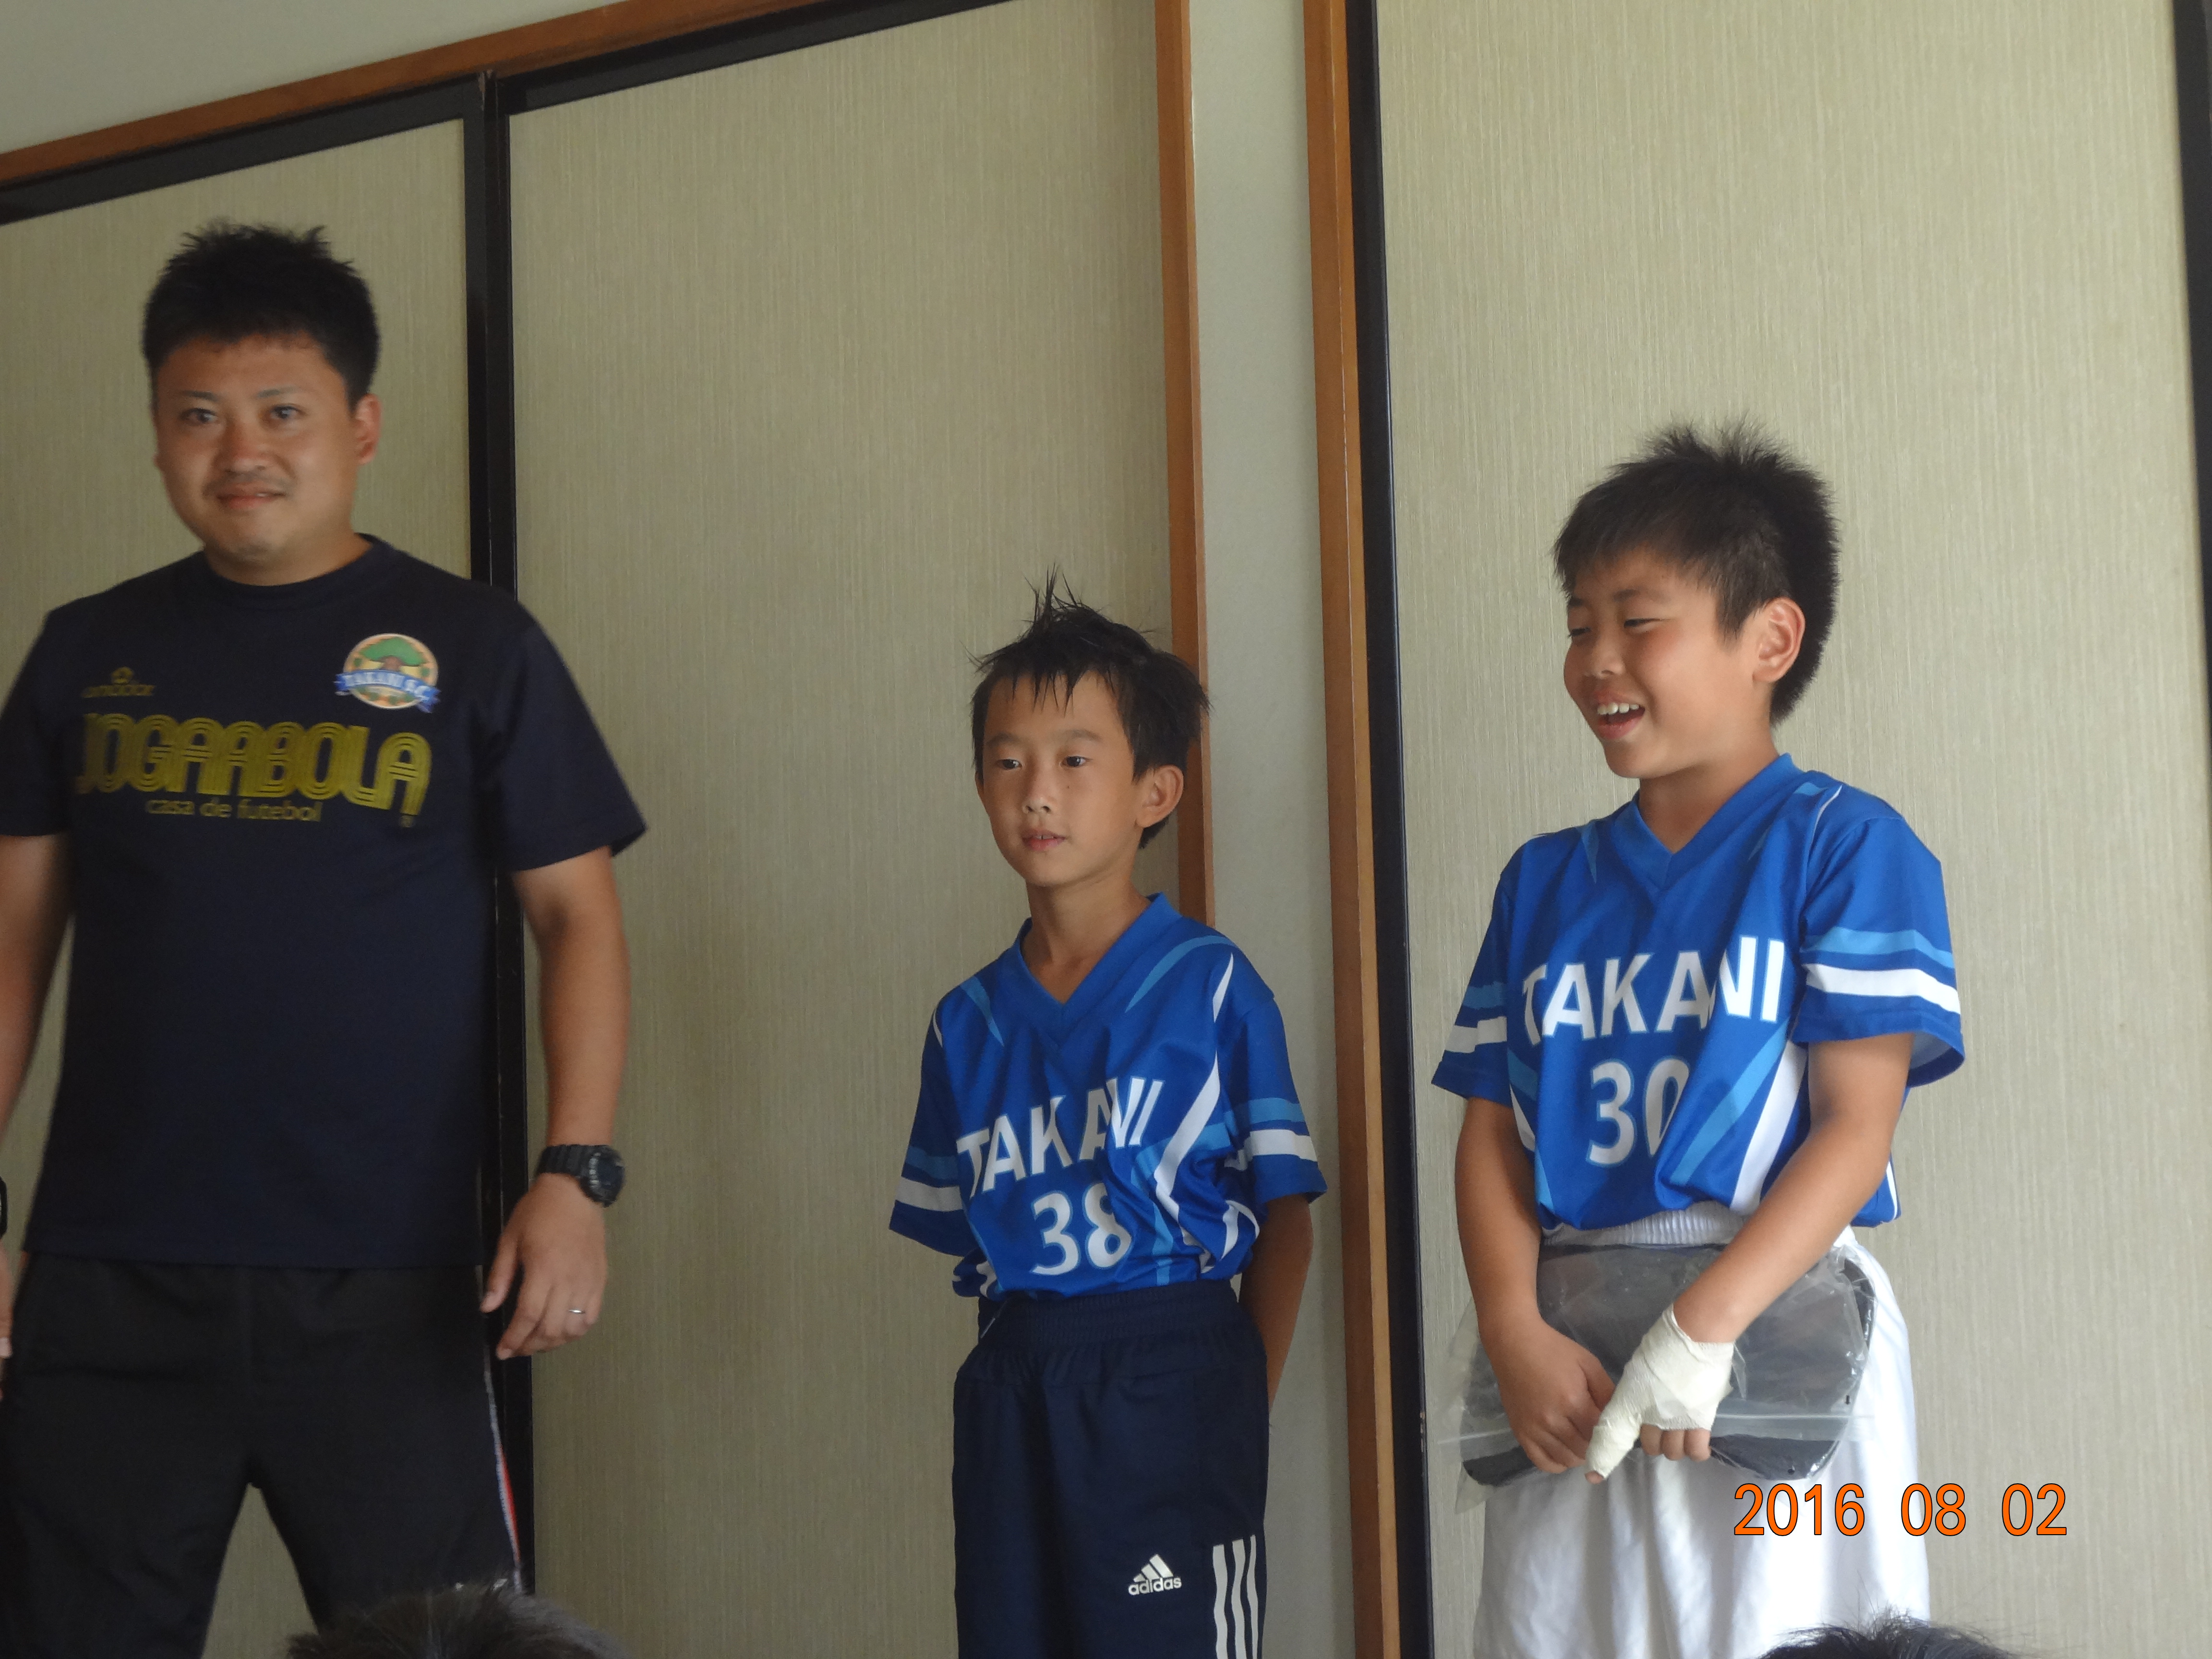 http://www.takani-sc.com/blog/photo/DSC02544.JPG